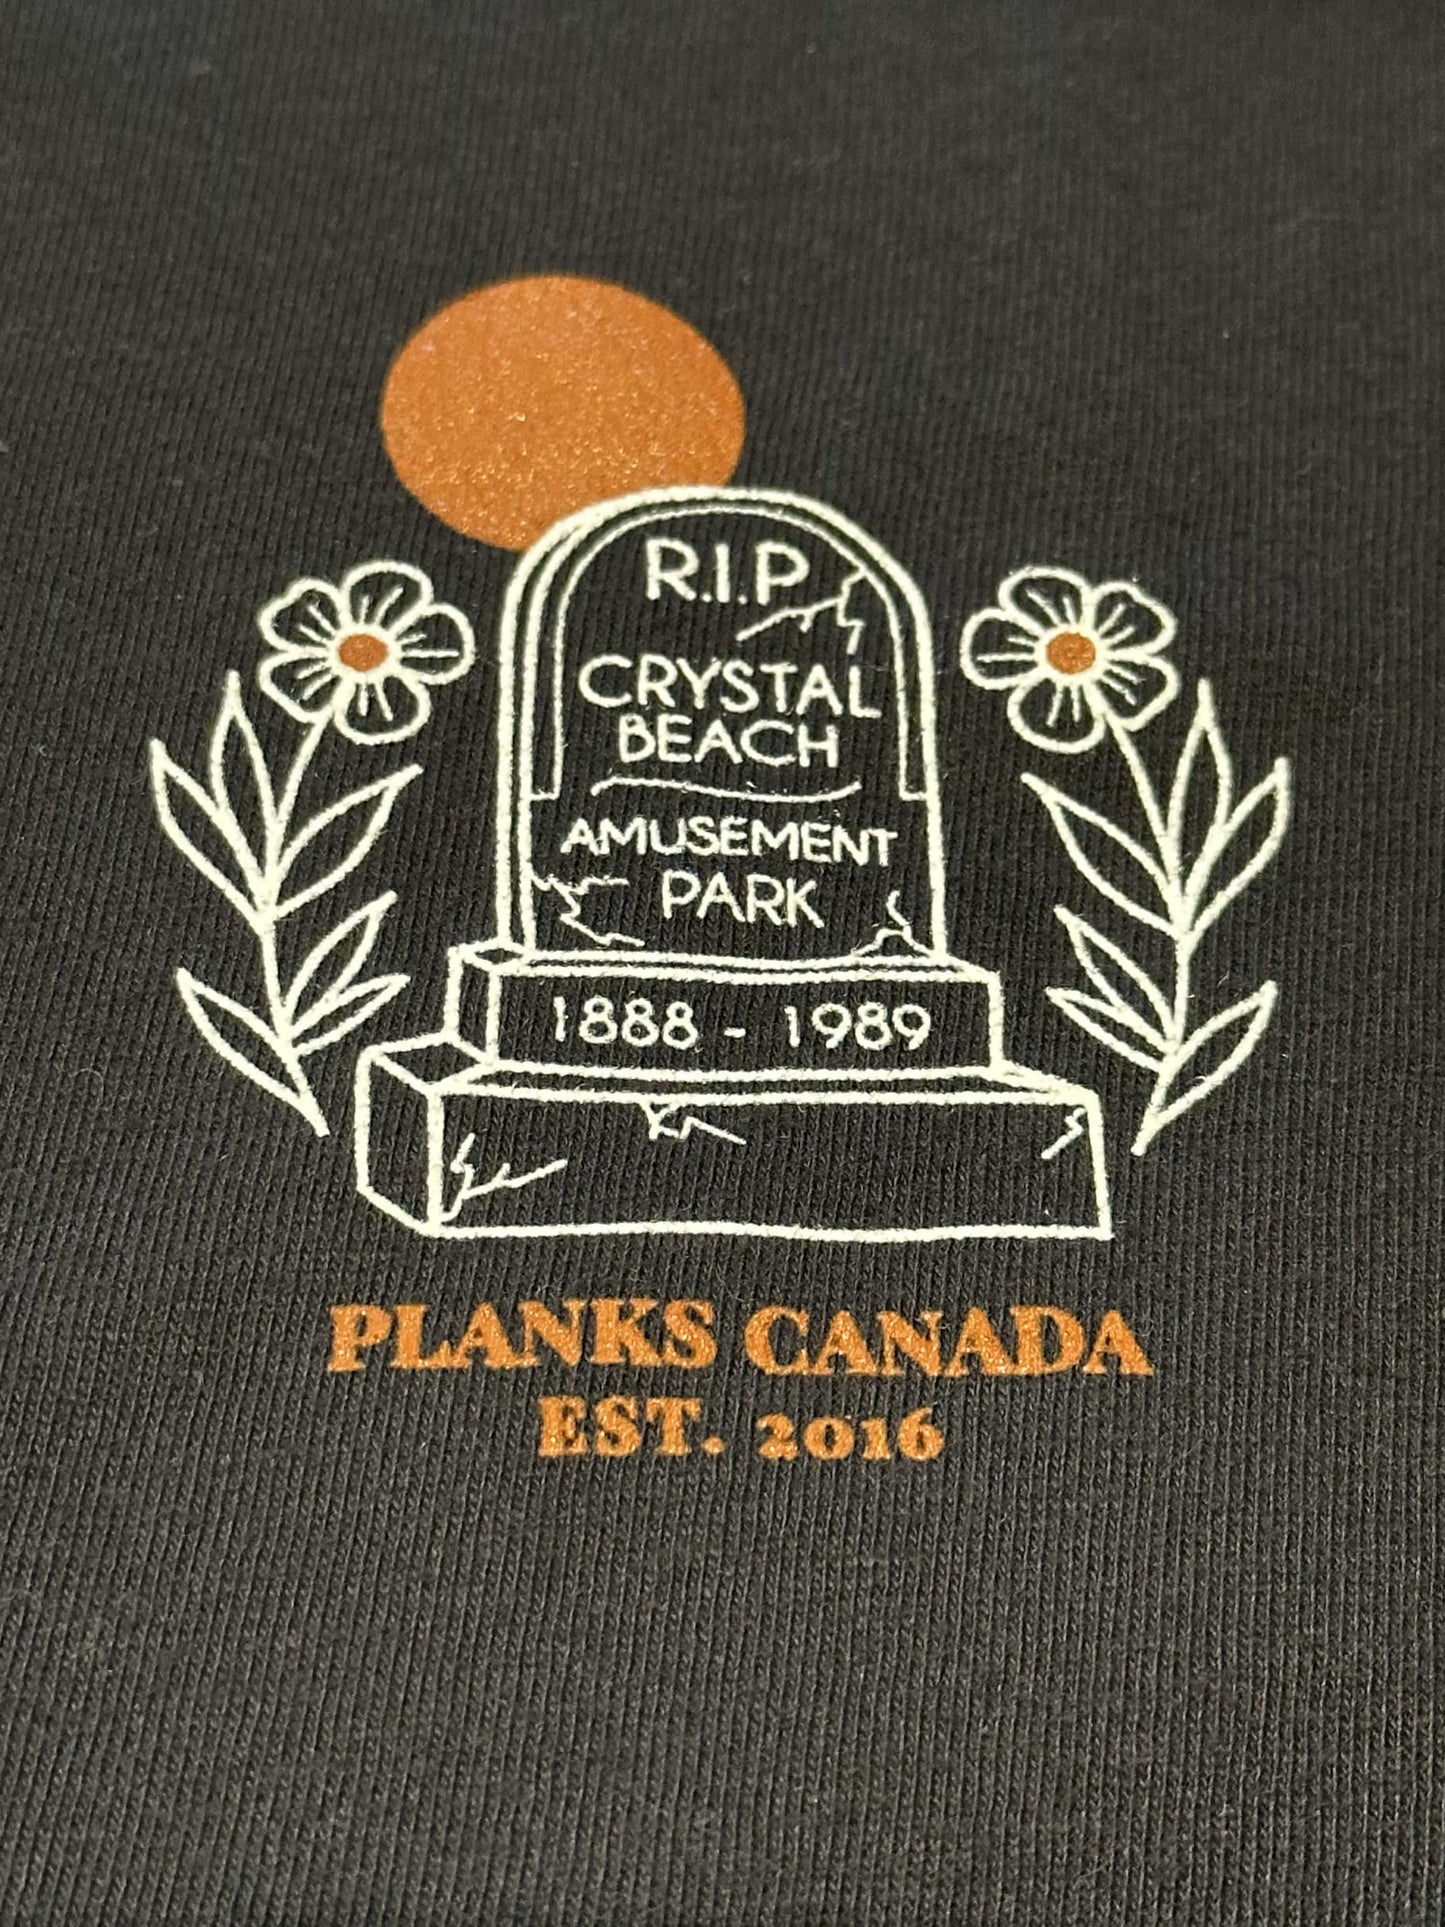 John E. RIP Crystal Beach Amusement Park Long Sleeve Tee - Black